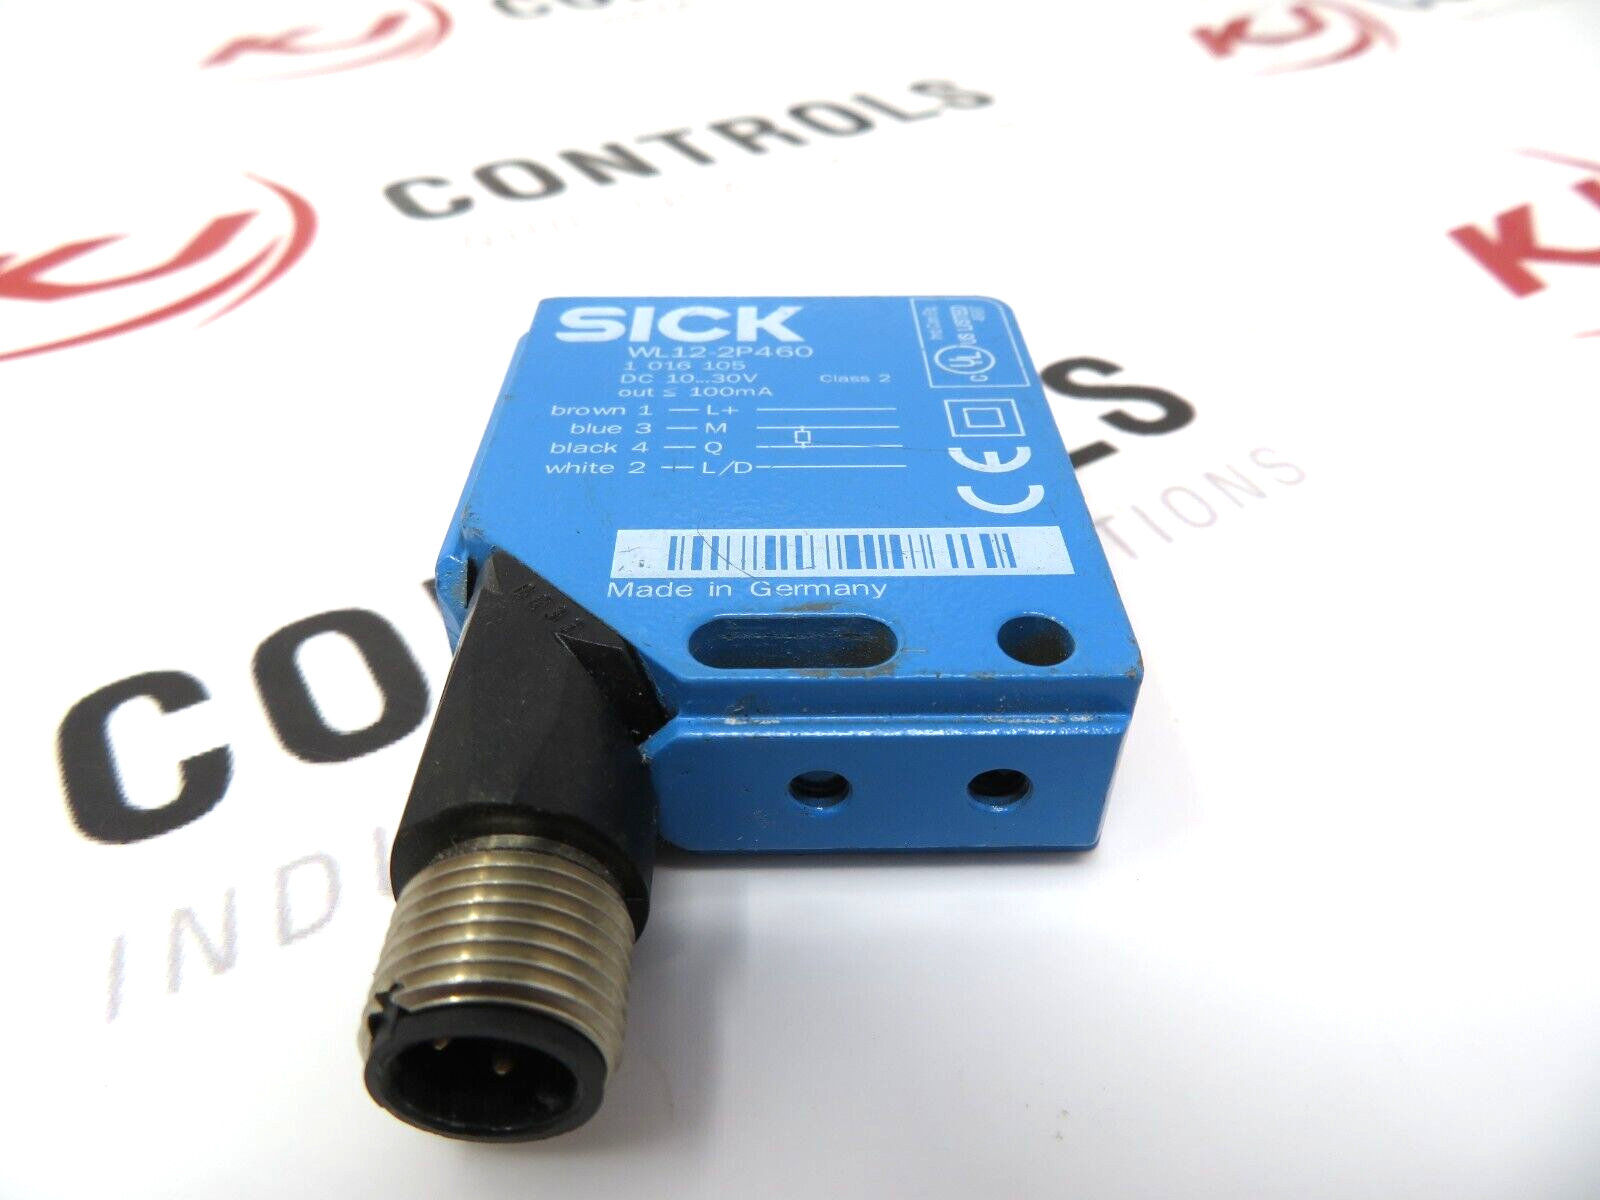 SICK WL12-2P460 Photoelectric Sensor Red 0-4M Range Polarized PL 80 A 4Pin